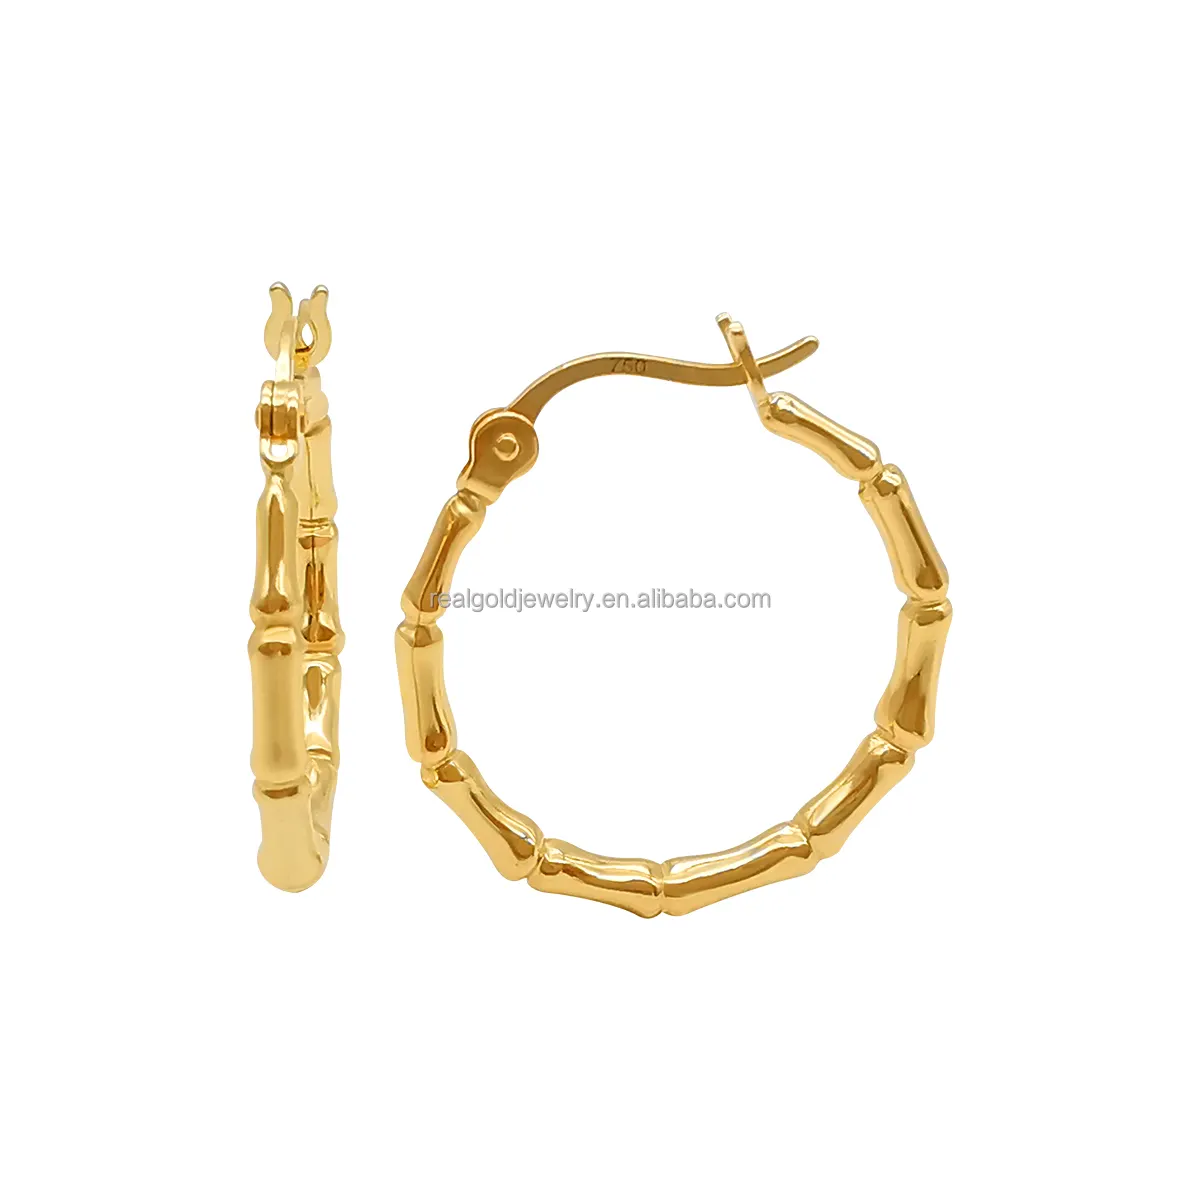 New Designs Genuine 18K Yellow Gold Hoop Earring Bamboo Designed Fine jewelry 18K Earring Hoops